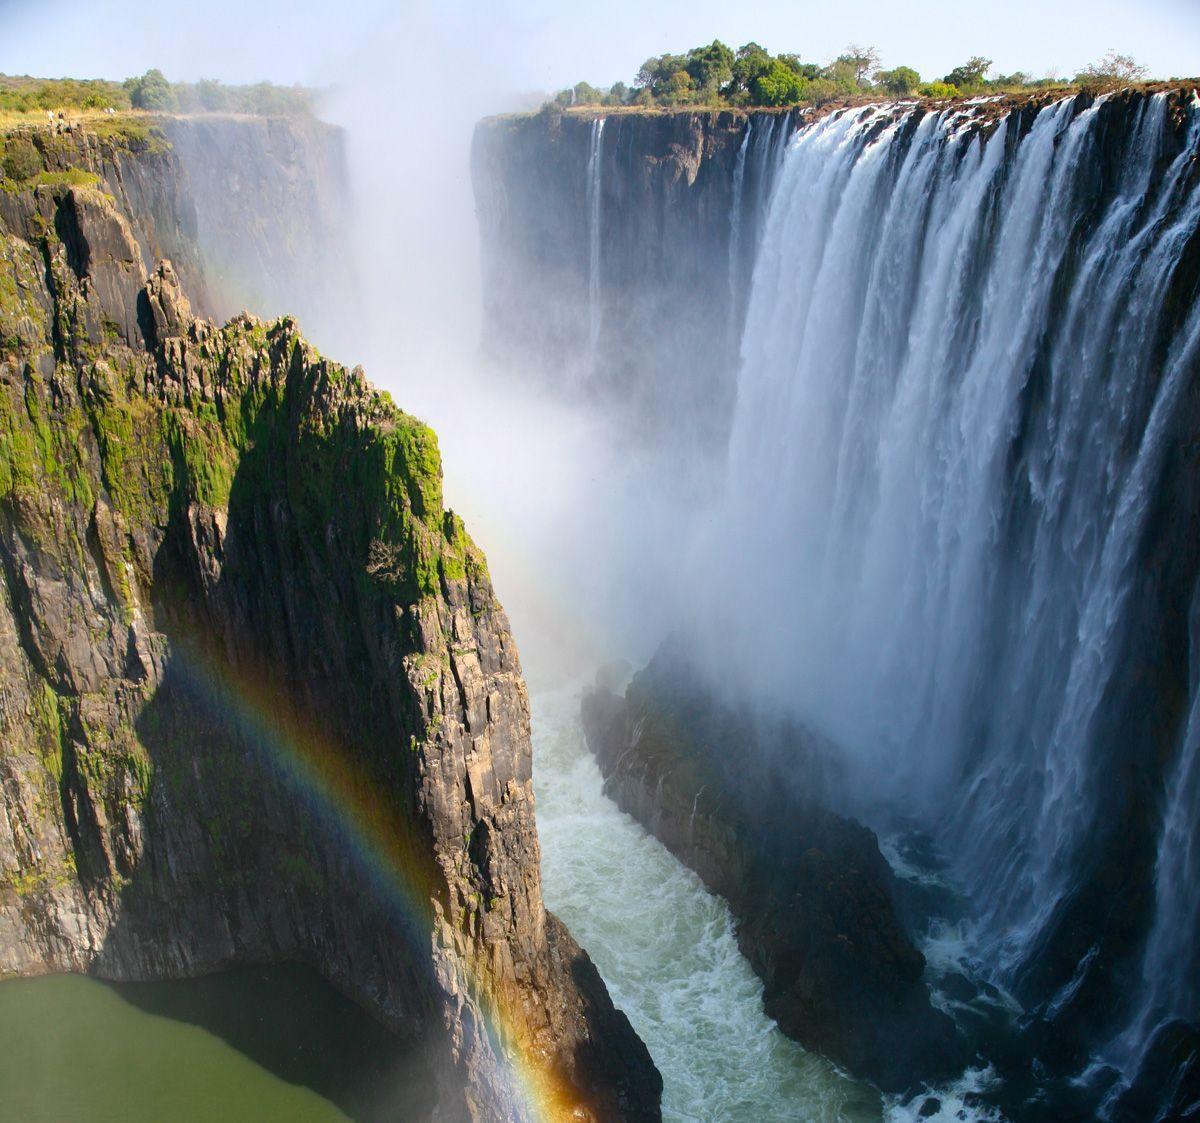 Victoria Falls is located on the Zambezi River, on the border